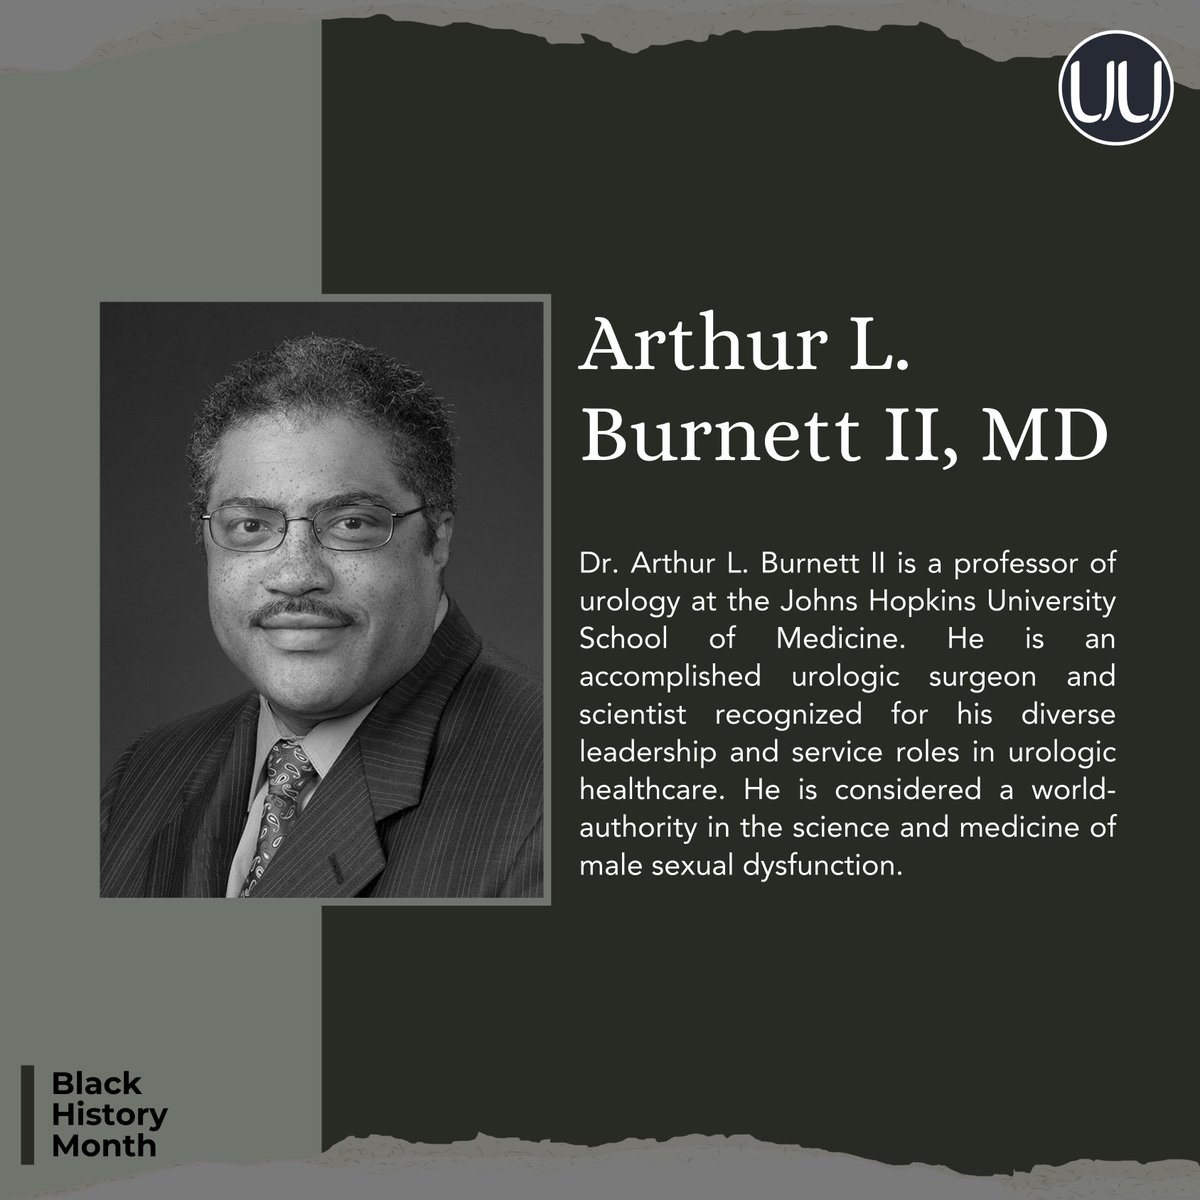 Celebrating black leaders in Urology!
Dr. Arthur L. Burnett - #LivingLegendinUrology

#BlackHistoryMonth #DiversityInMedicine #BlackExcellence  #BlackInMedicine #URiM